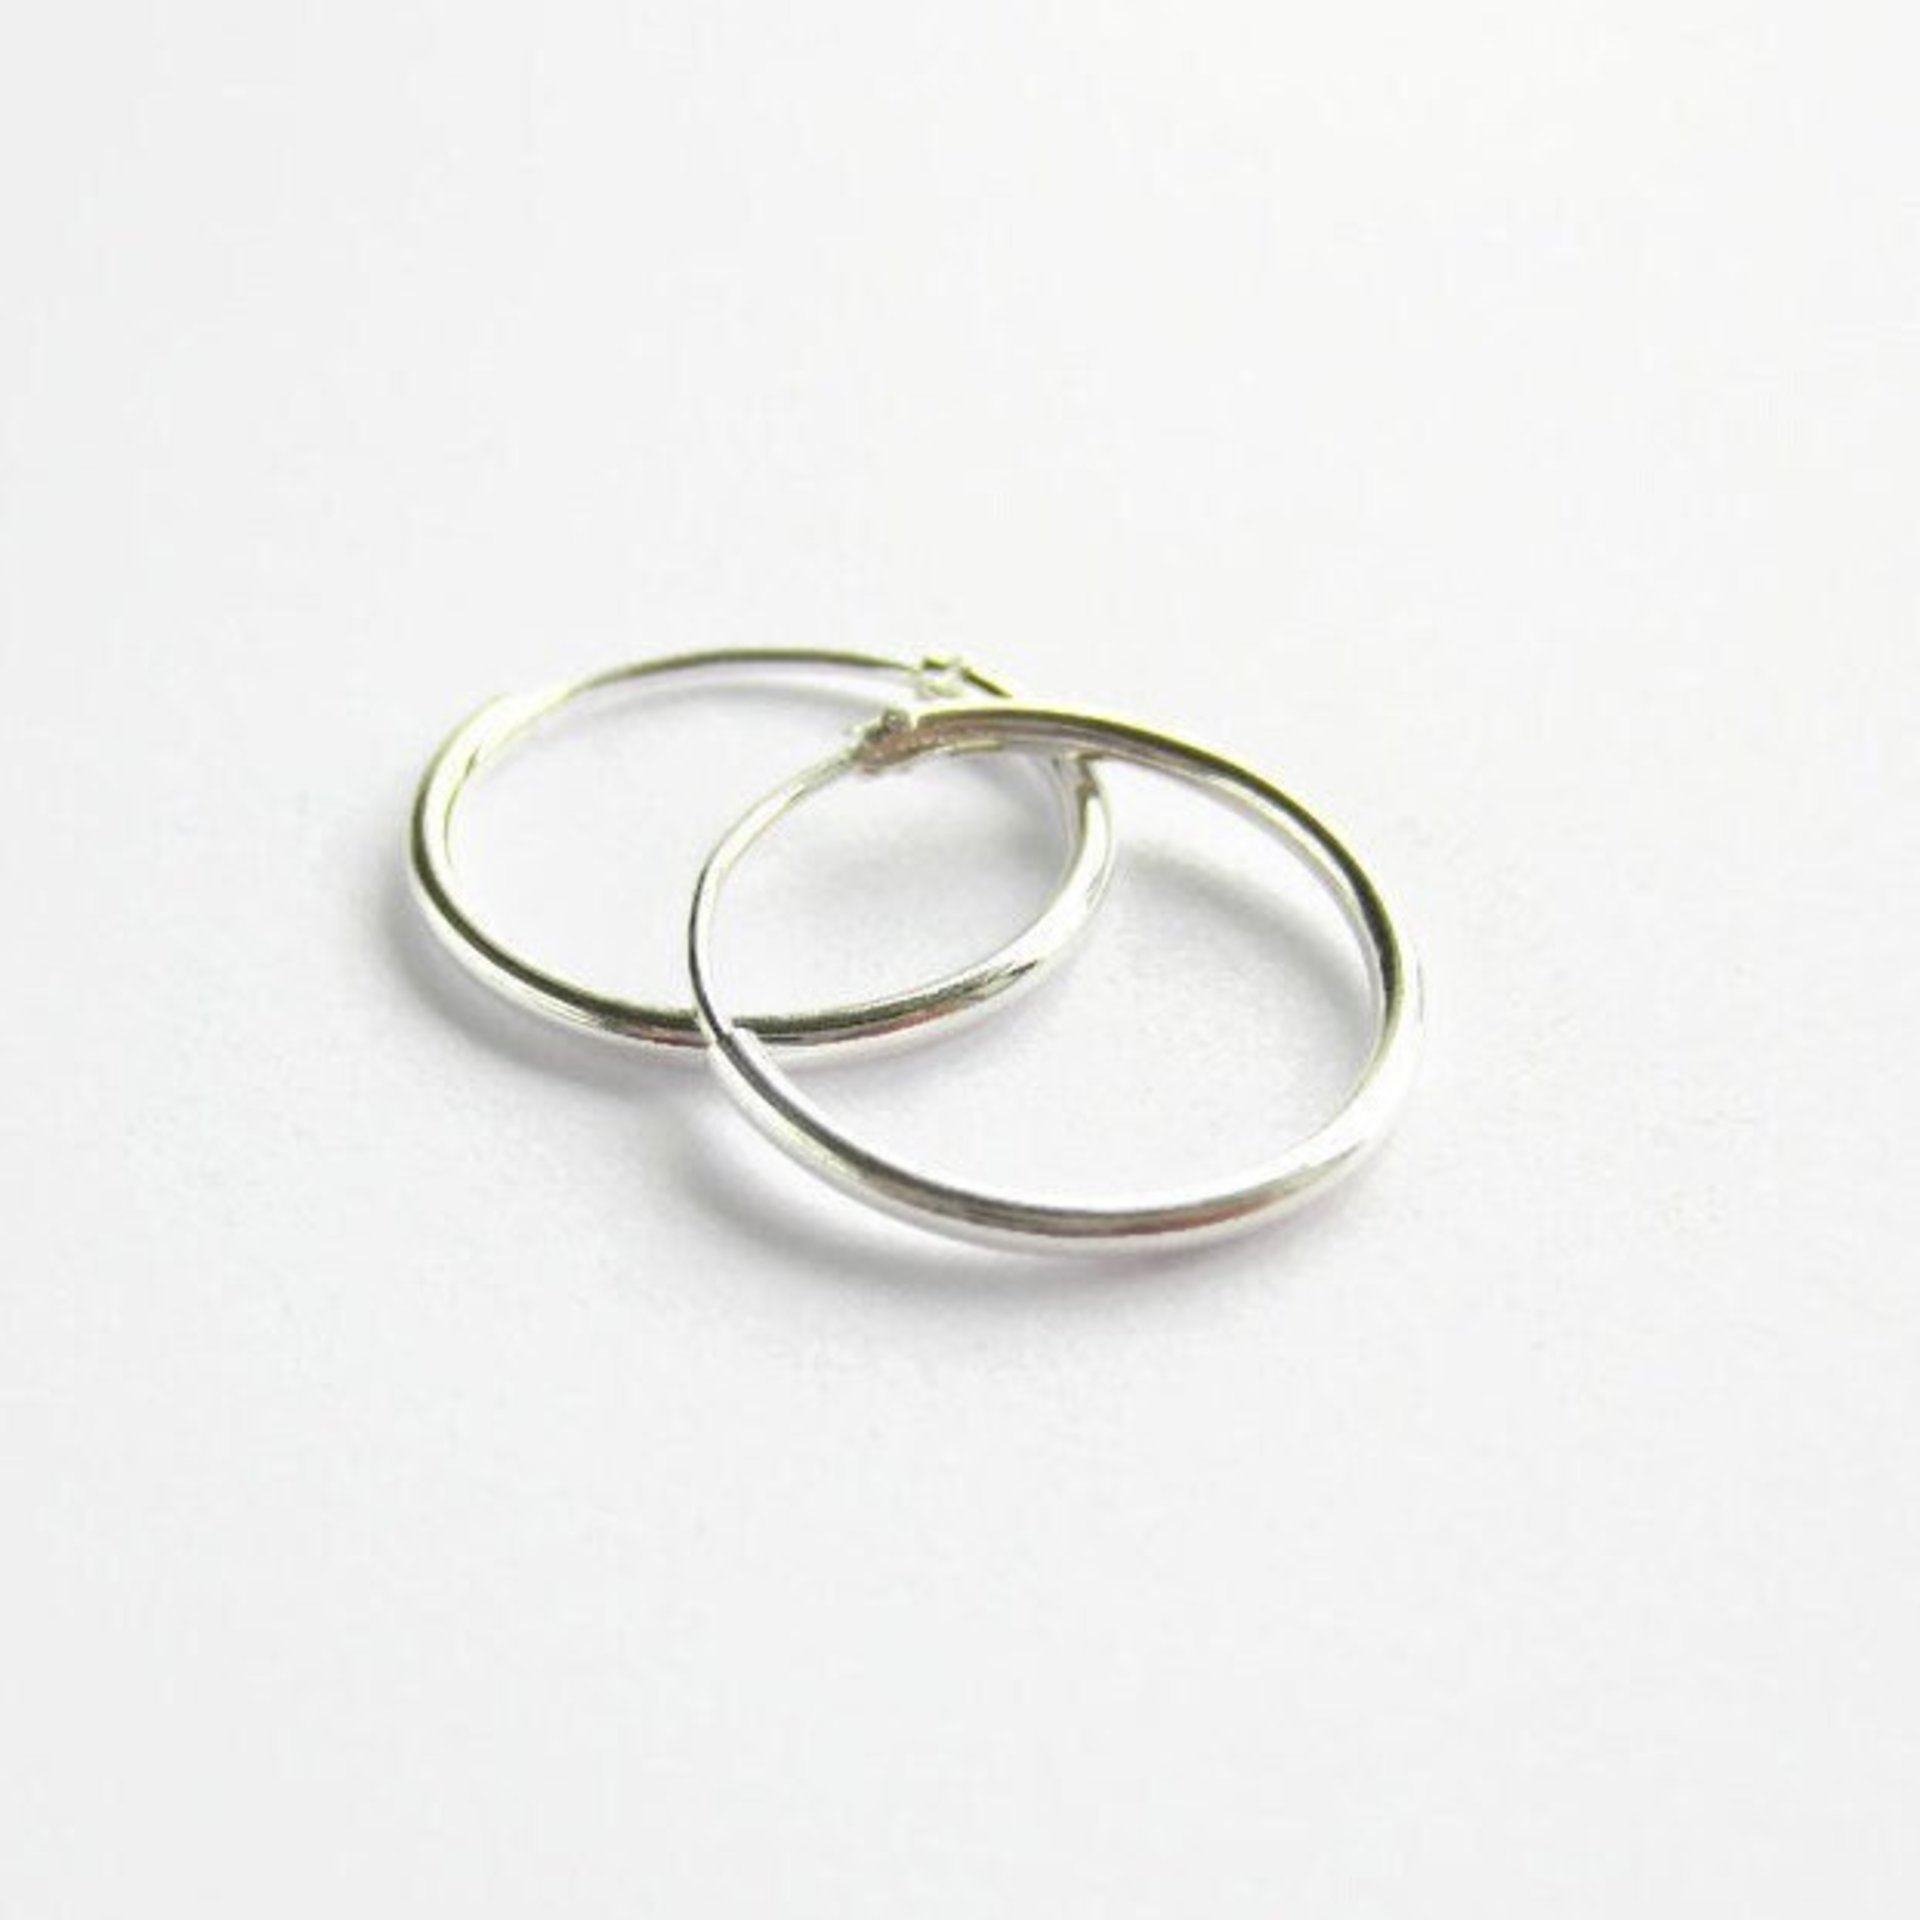 Single or Pair of 20mm 925 Sterling Silver Hinged Hoop Earrings ~ The Tiny Tree Frog Jewellery